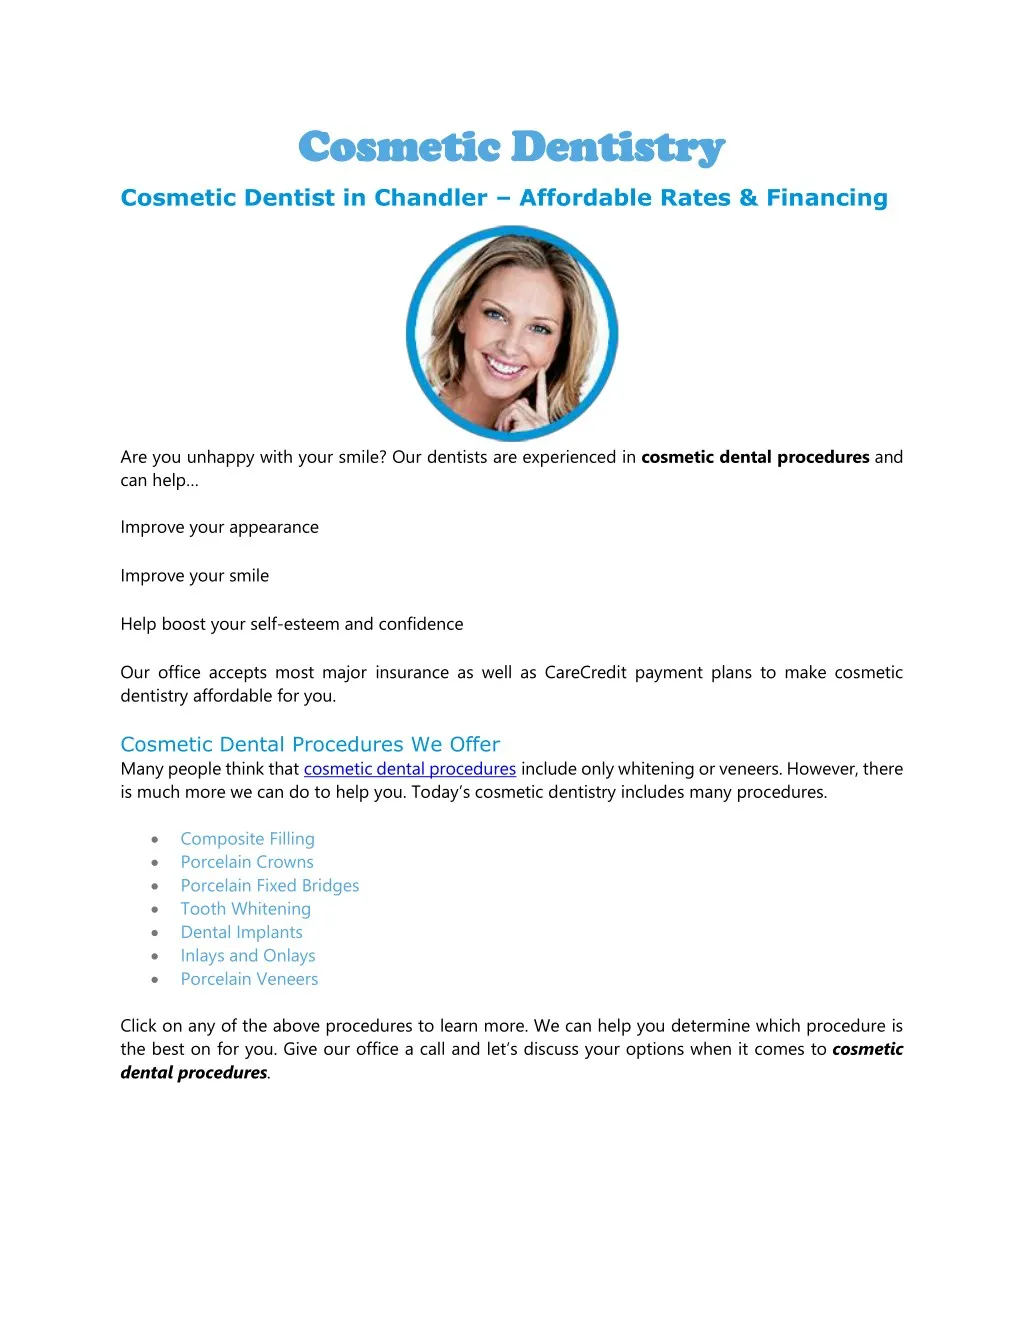 cosmetic dentistr cosmetic dentistry y n.